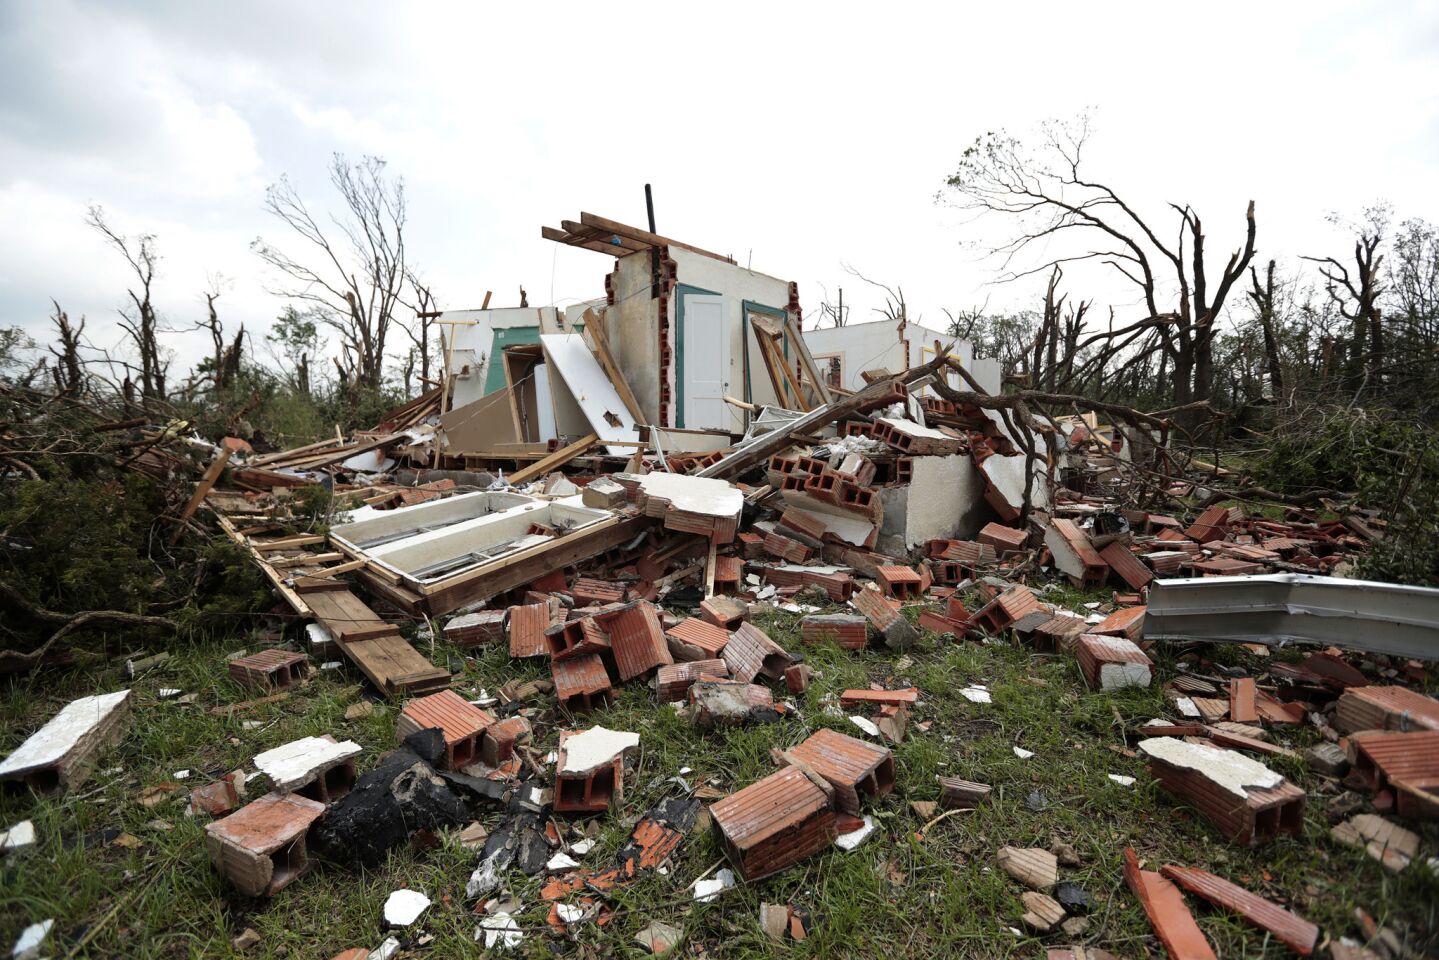 More damage in Shawnee, Okla.